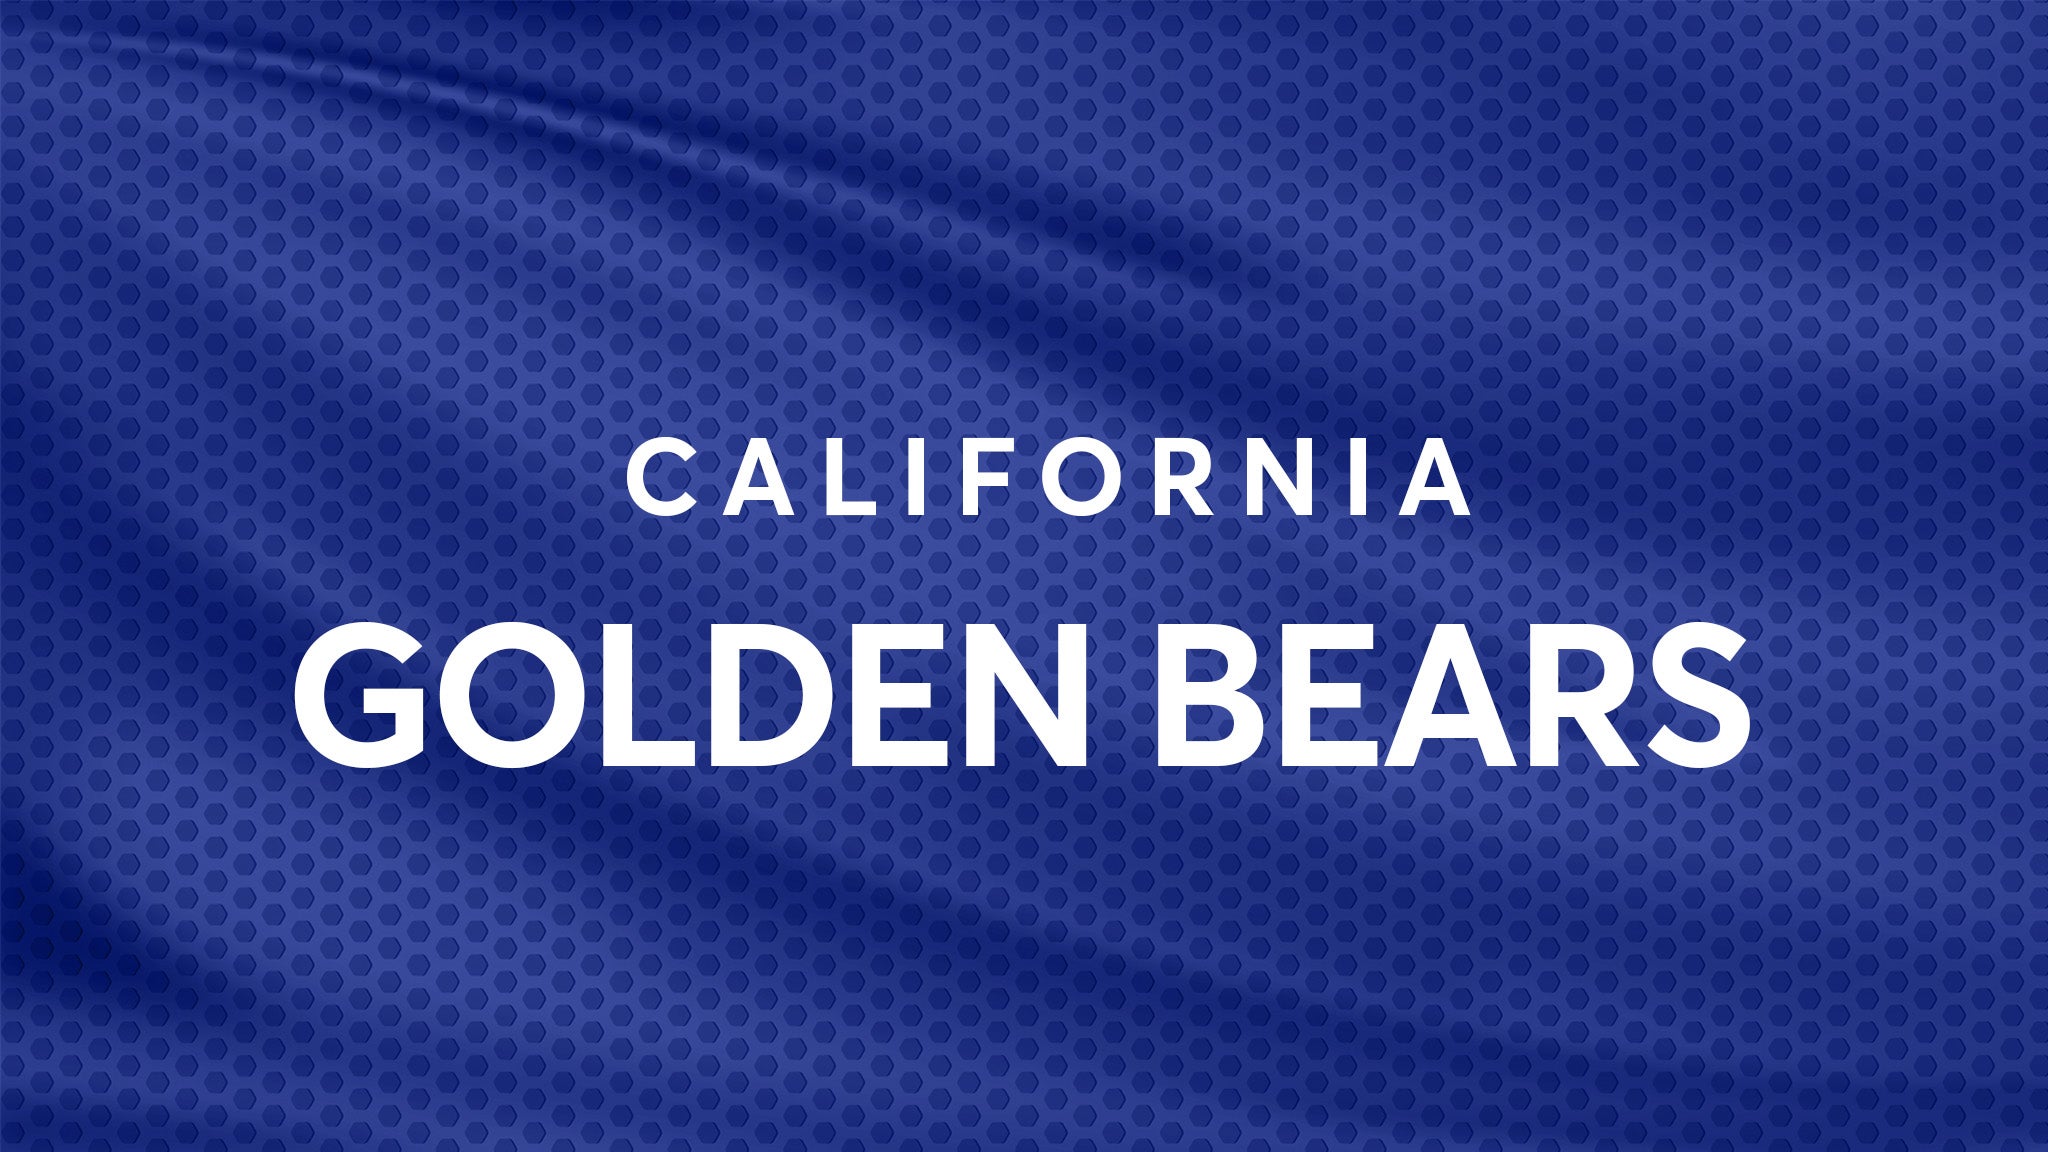 California Golden Bears Football vs. North Carolina State Wolfpack Football hero